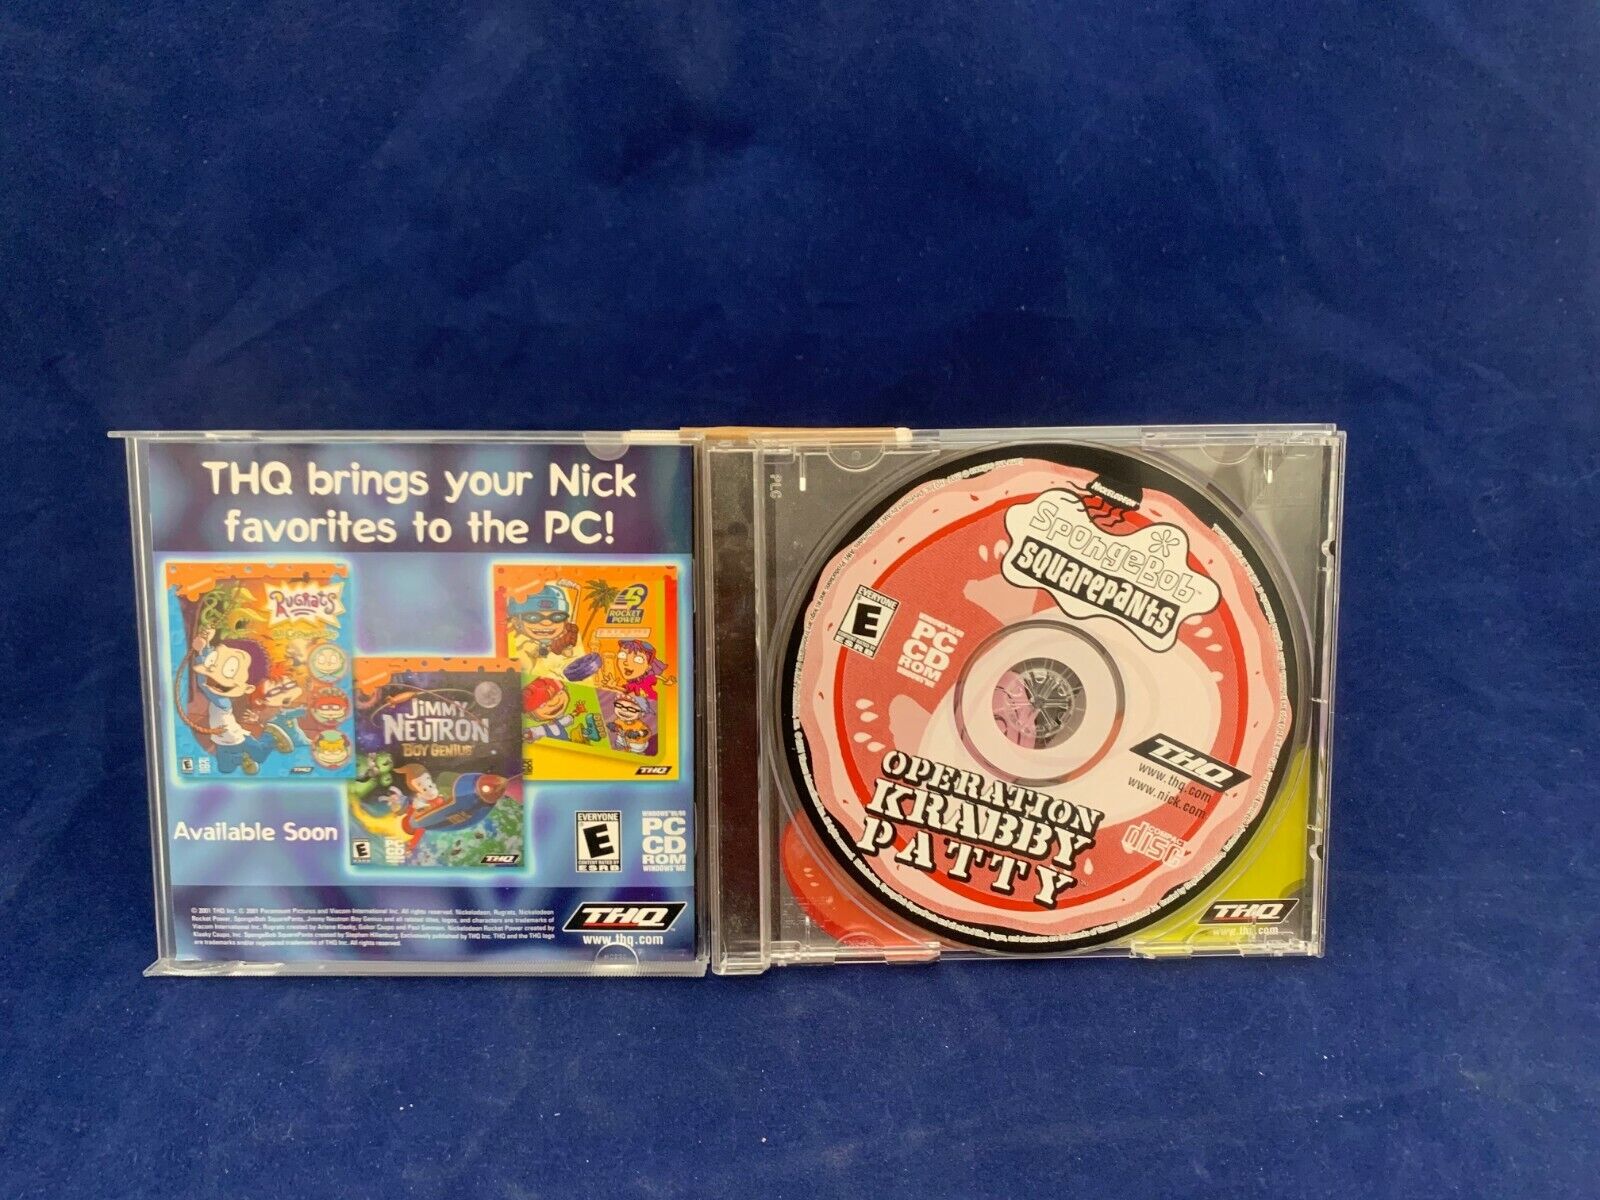 Spongebob Squarepants Operation Krabby Patty PC CD Rom THQ Game PreOwned